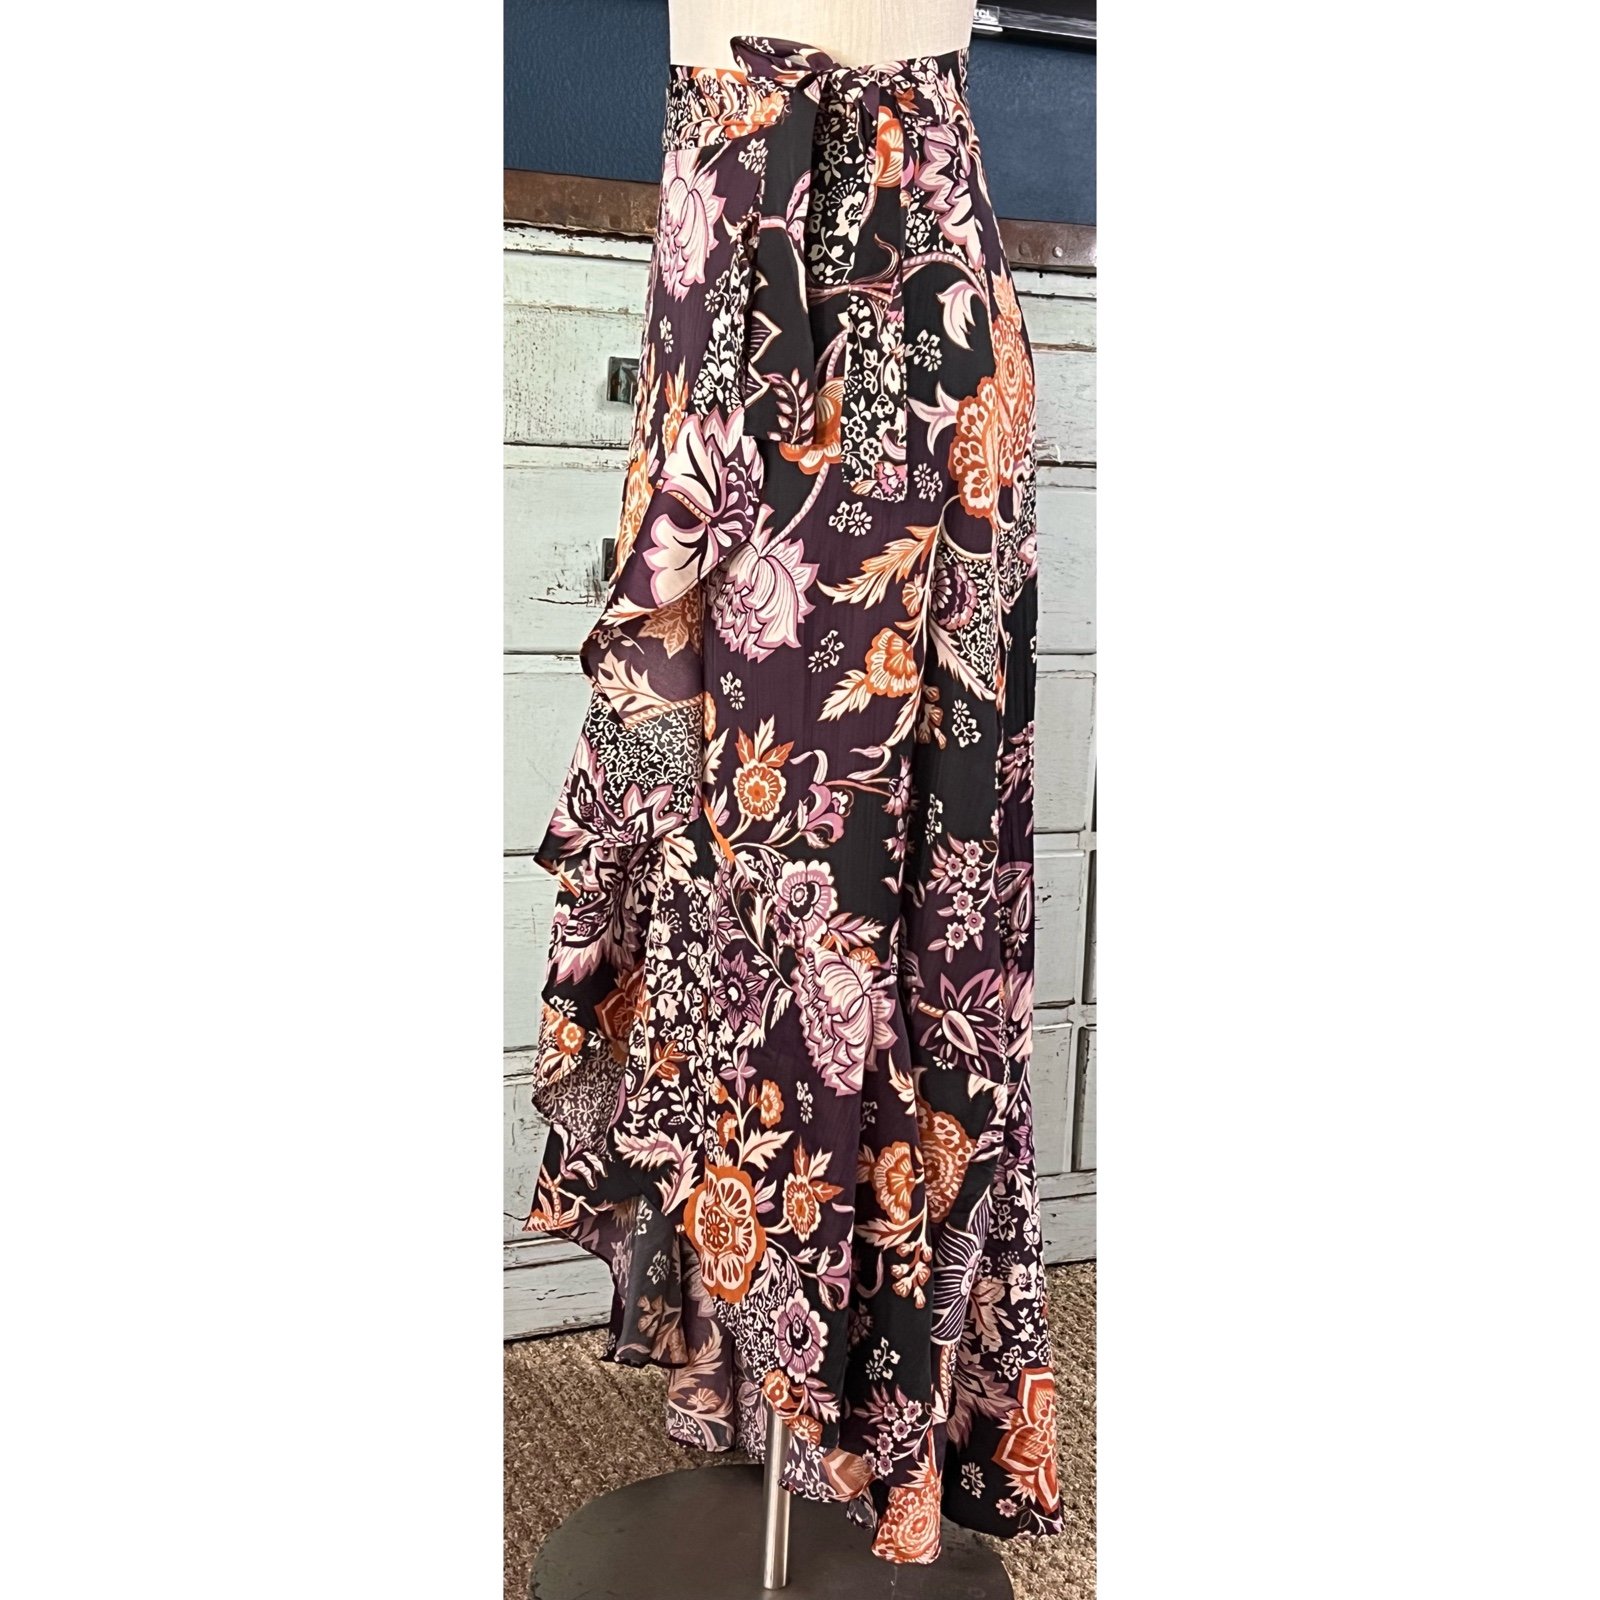 Discounted Anthropologie Floral Wrap Skirt XSP LqodFCbM4 Zero Profit 